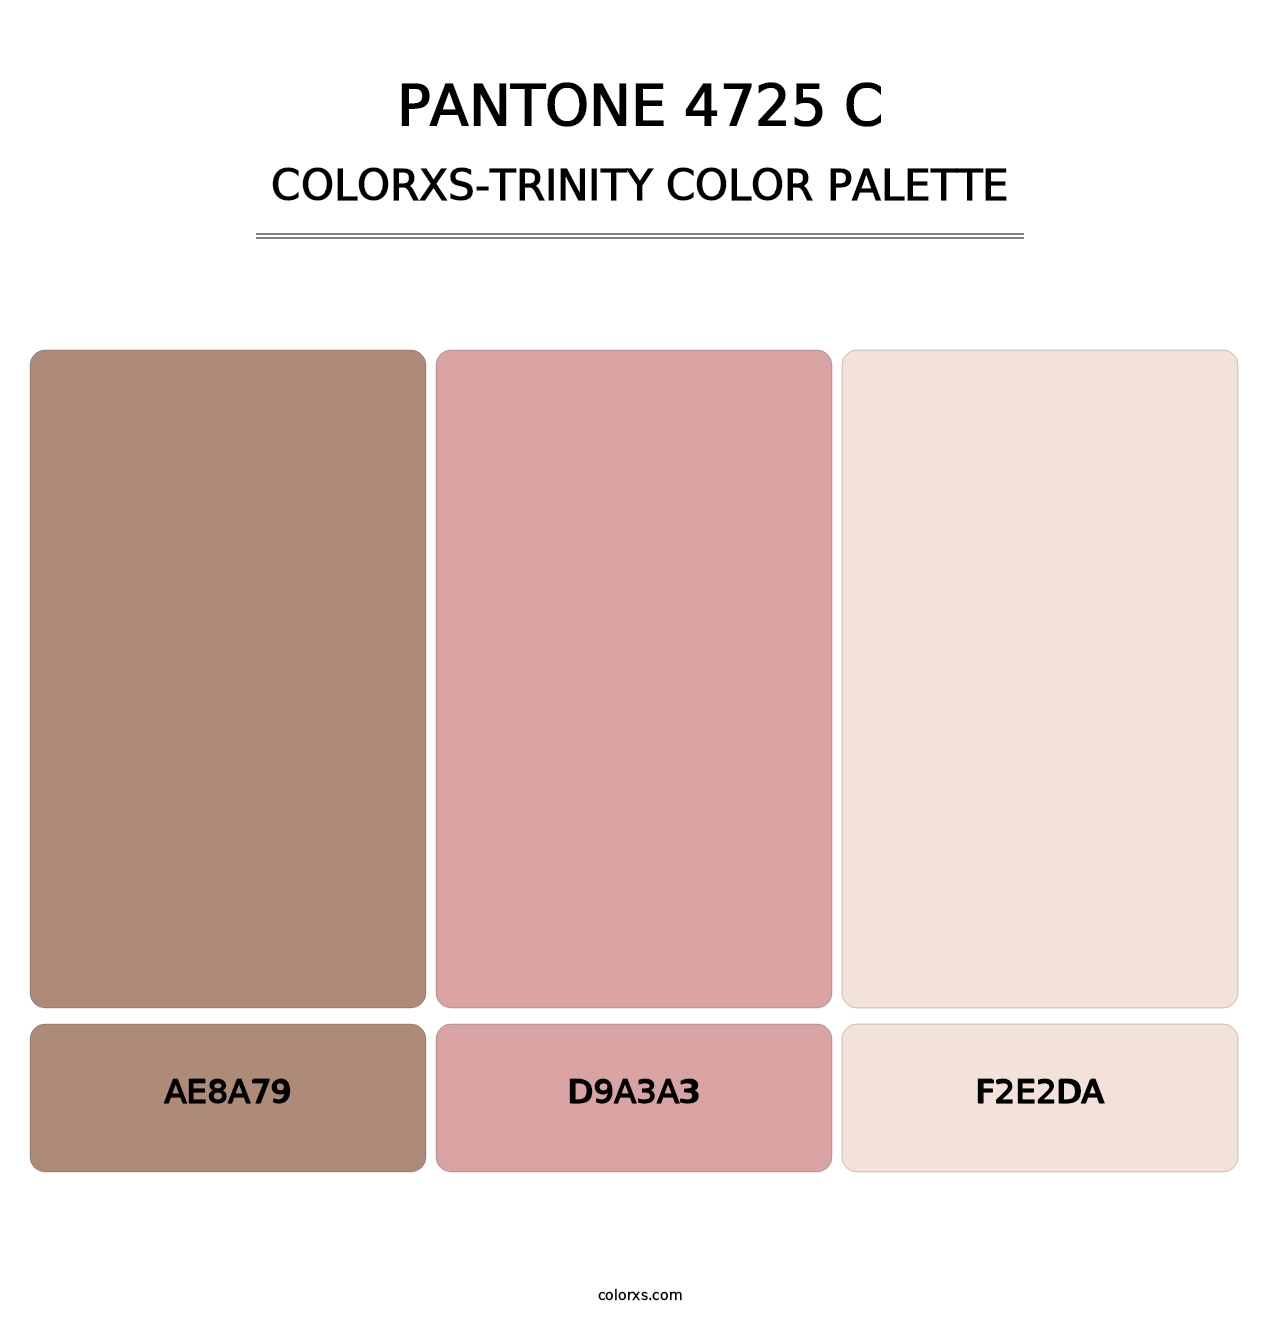 PANTONE 4725 C - Colorxs Trinity Palette